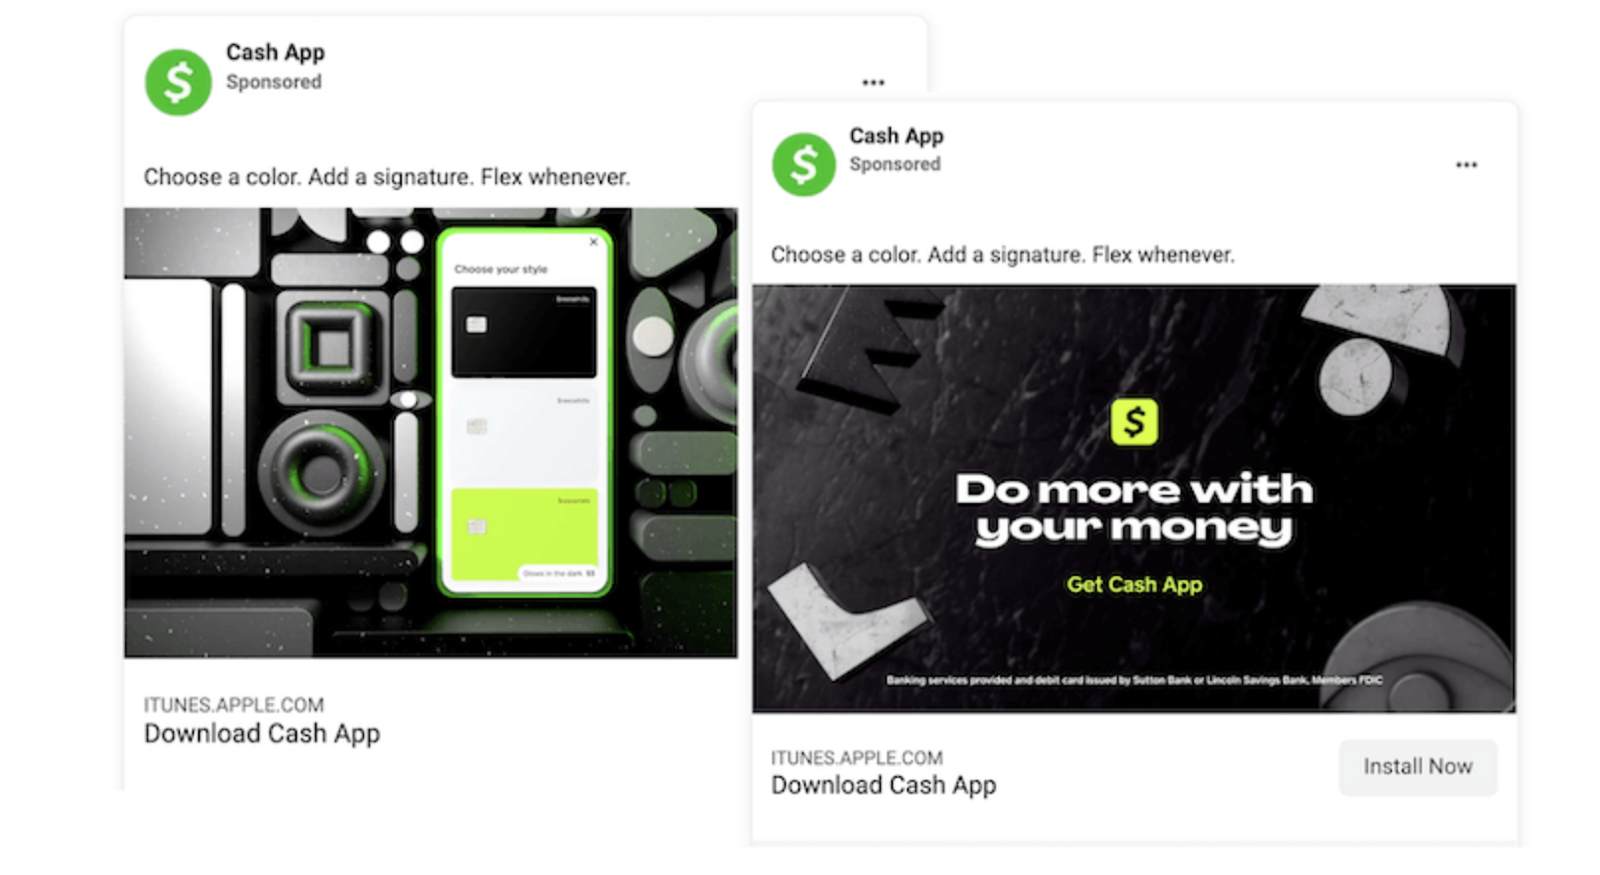 Cash App features short, straightforward copy in its Facebook ad